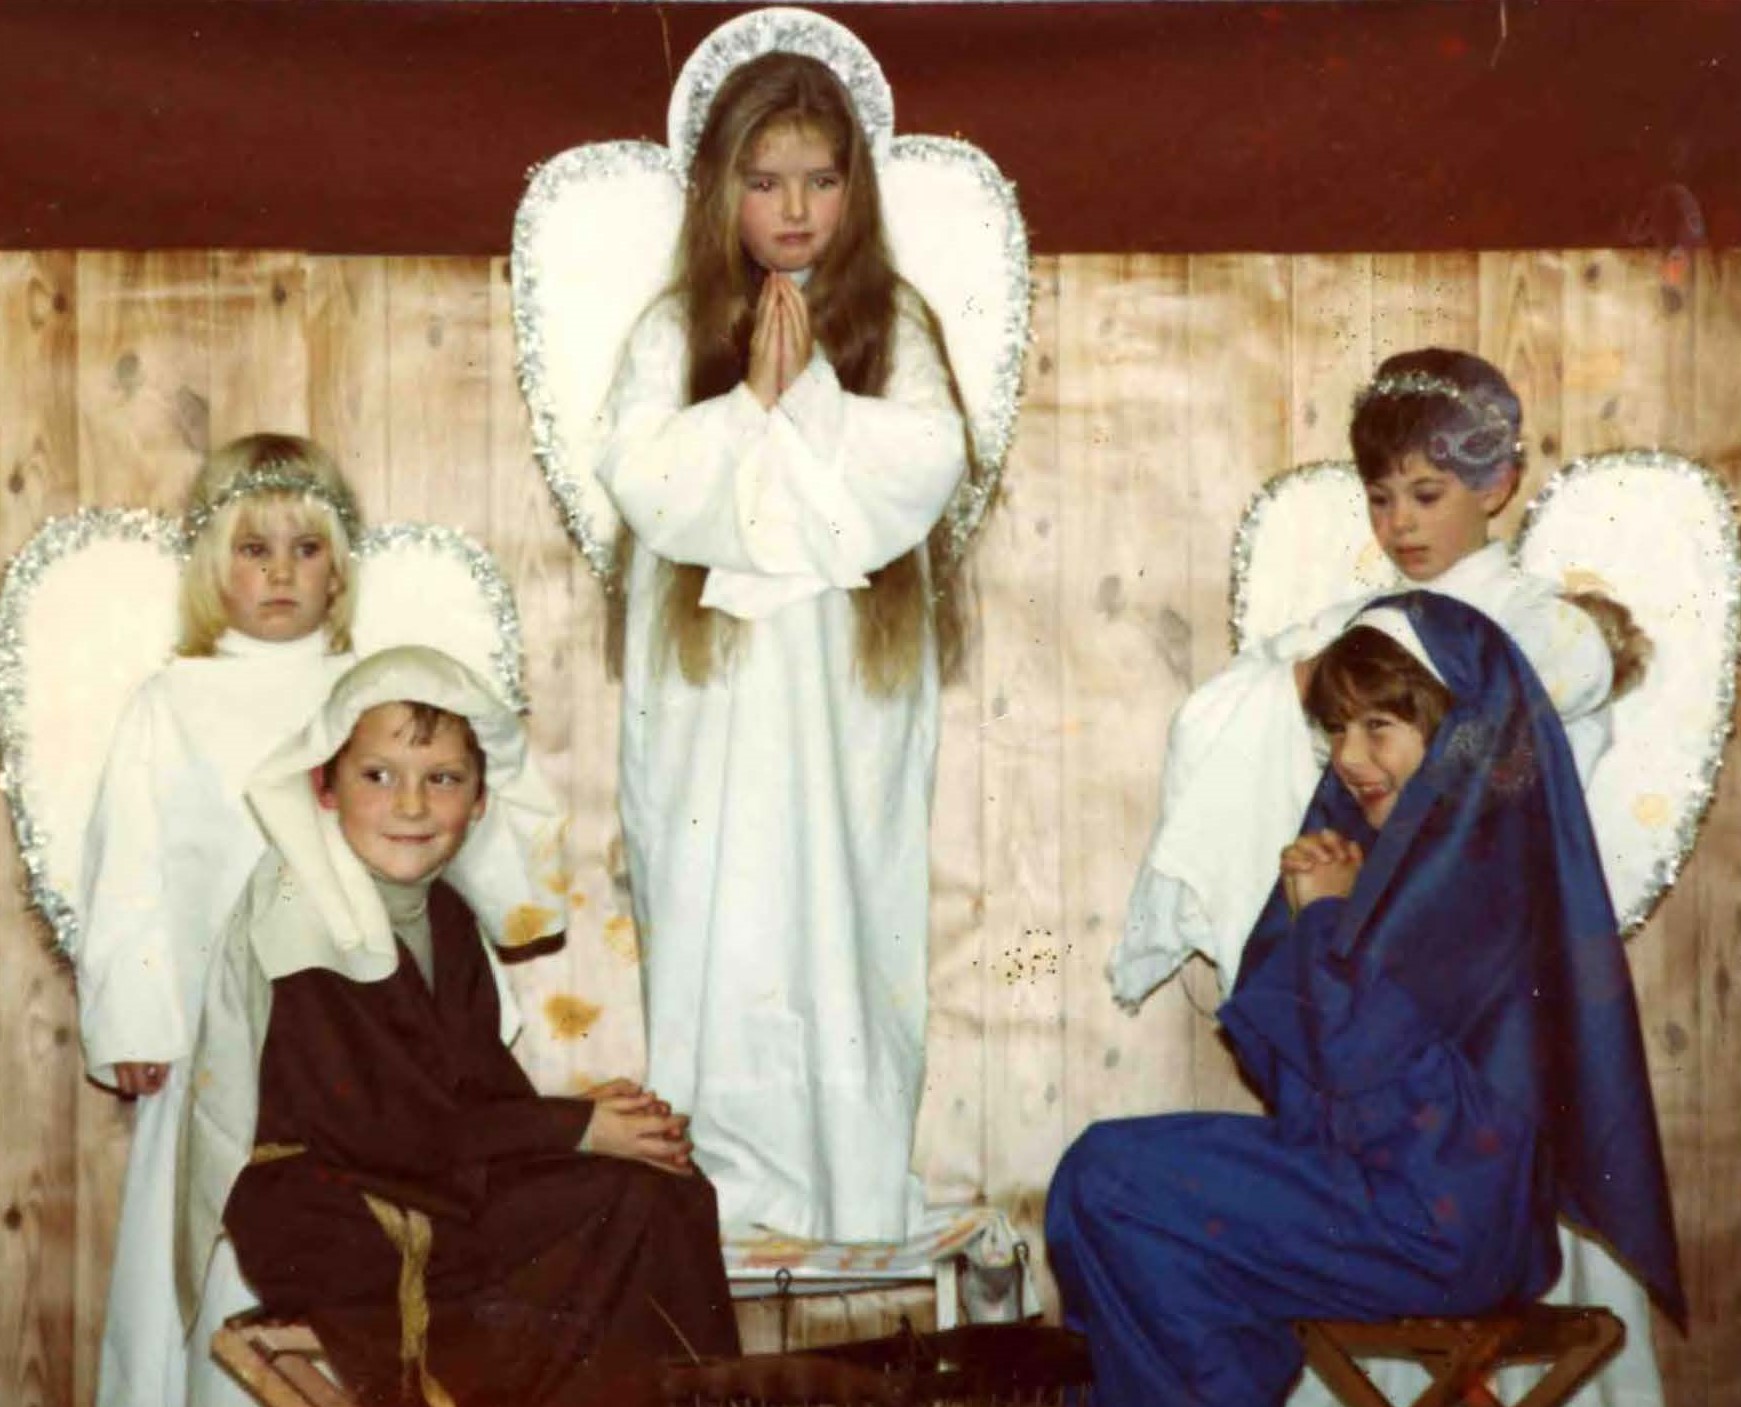 Port Isaac School, Nativity Play, 1980